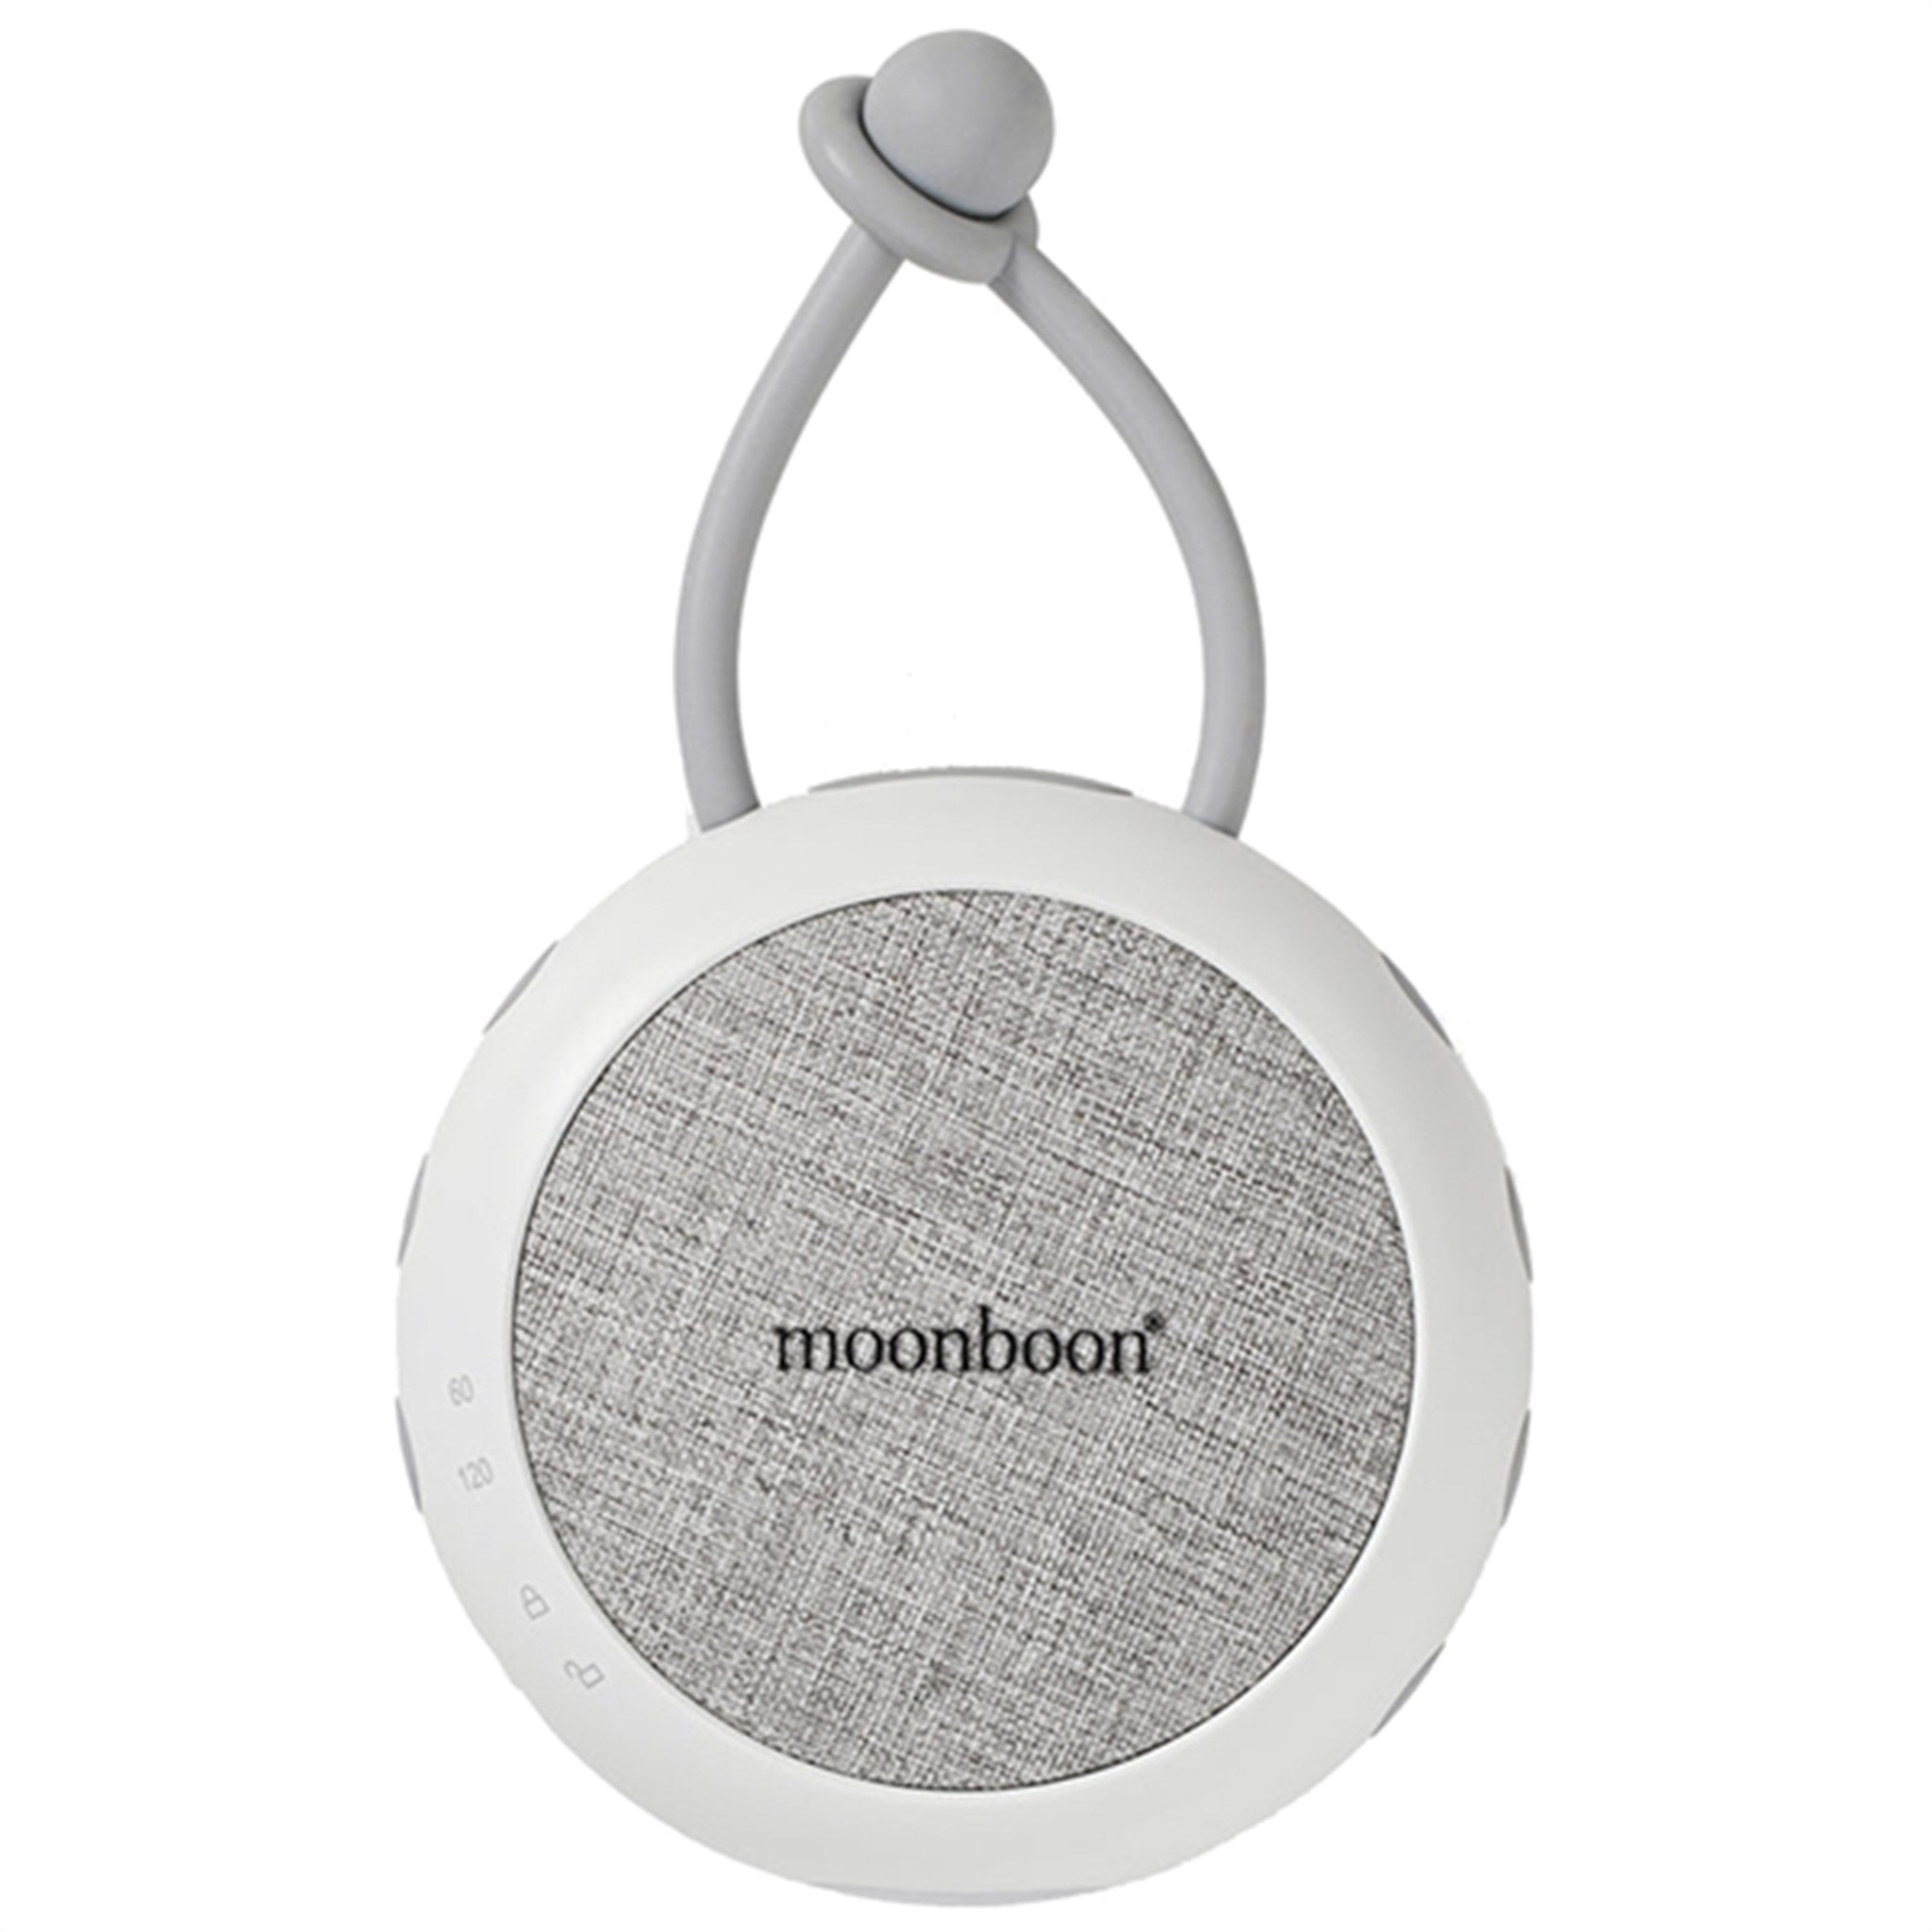 Moonboon White Noise Speaker - 用自然声音创造宁静与健康